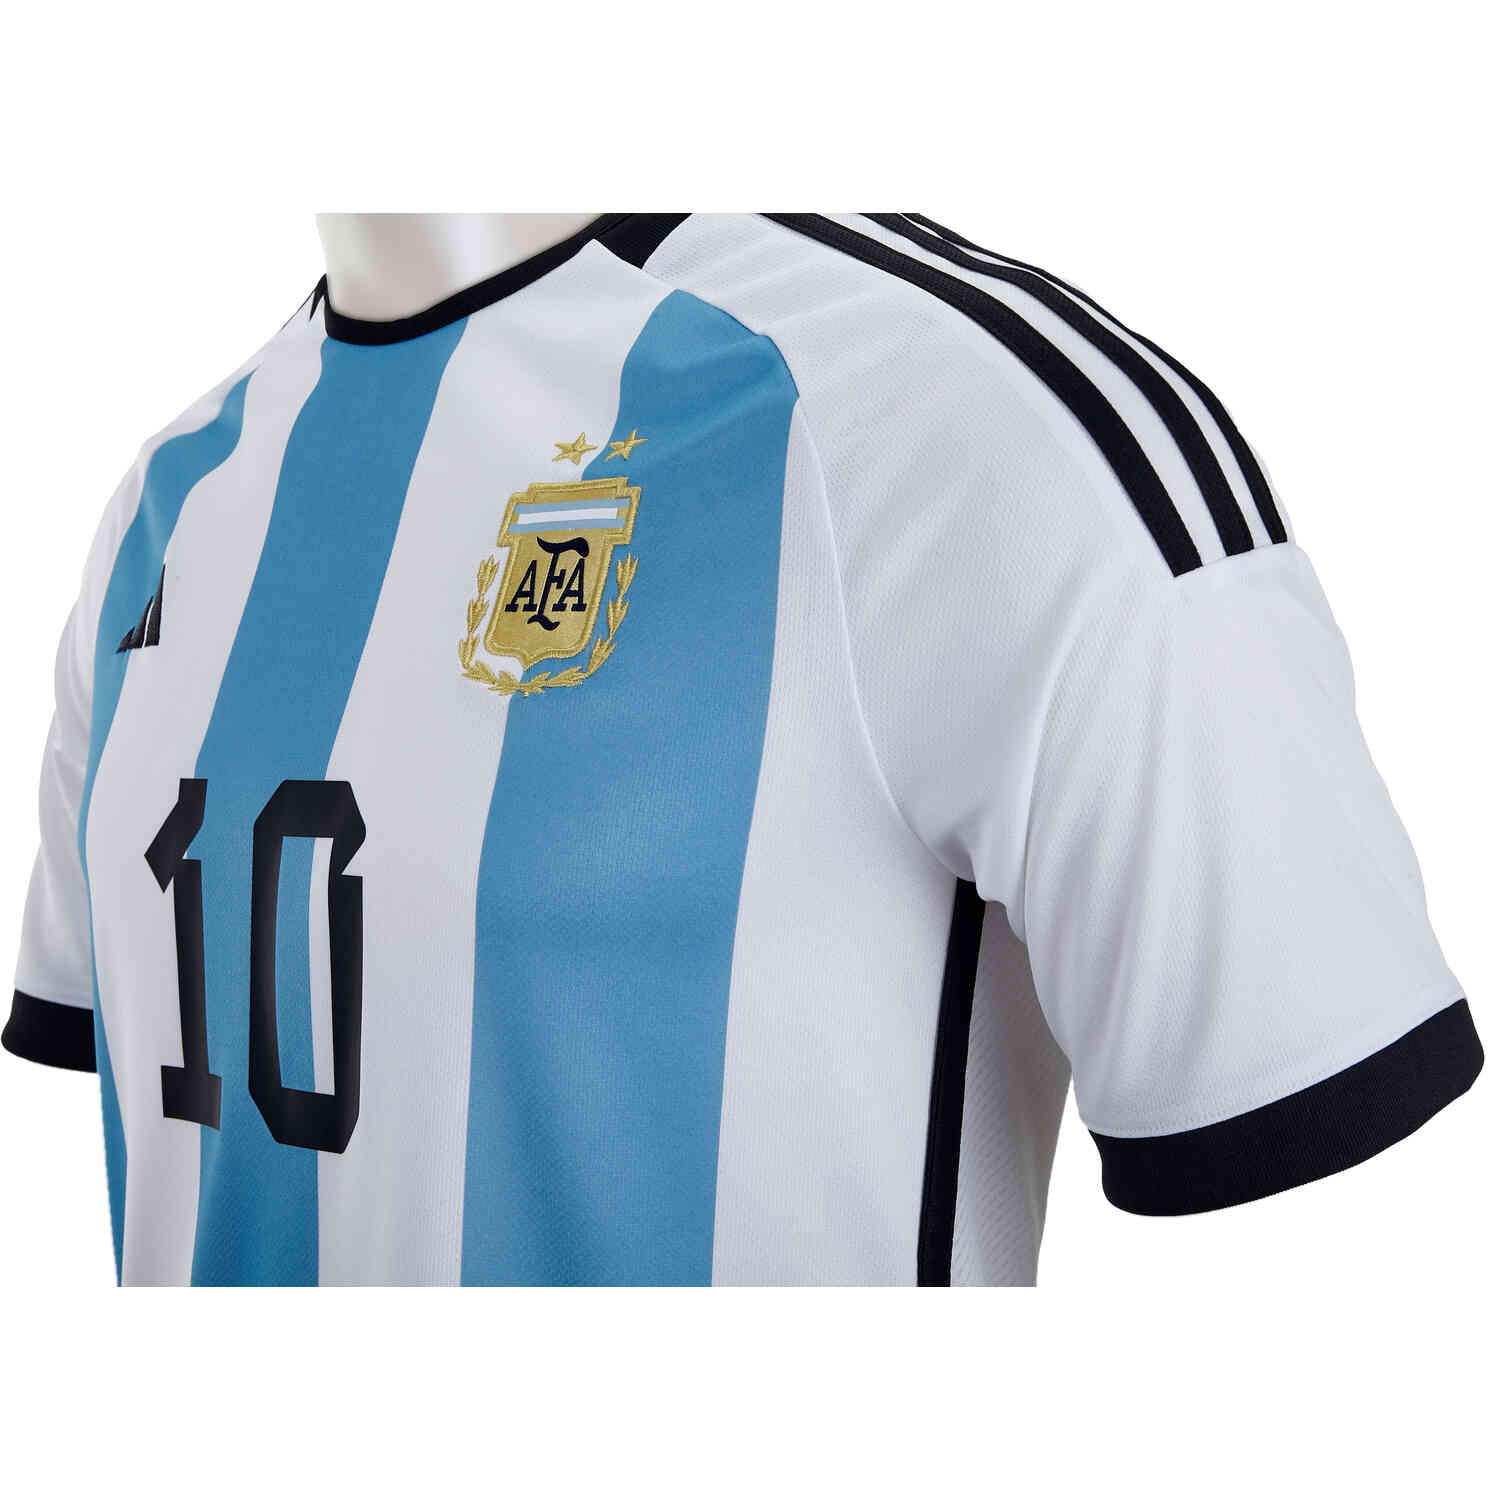 Necm Youth Sportswear Barca Leo Messi Kids Home Soccer Jersey/Shorts Football Socks Set 